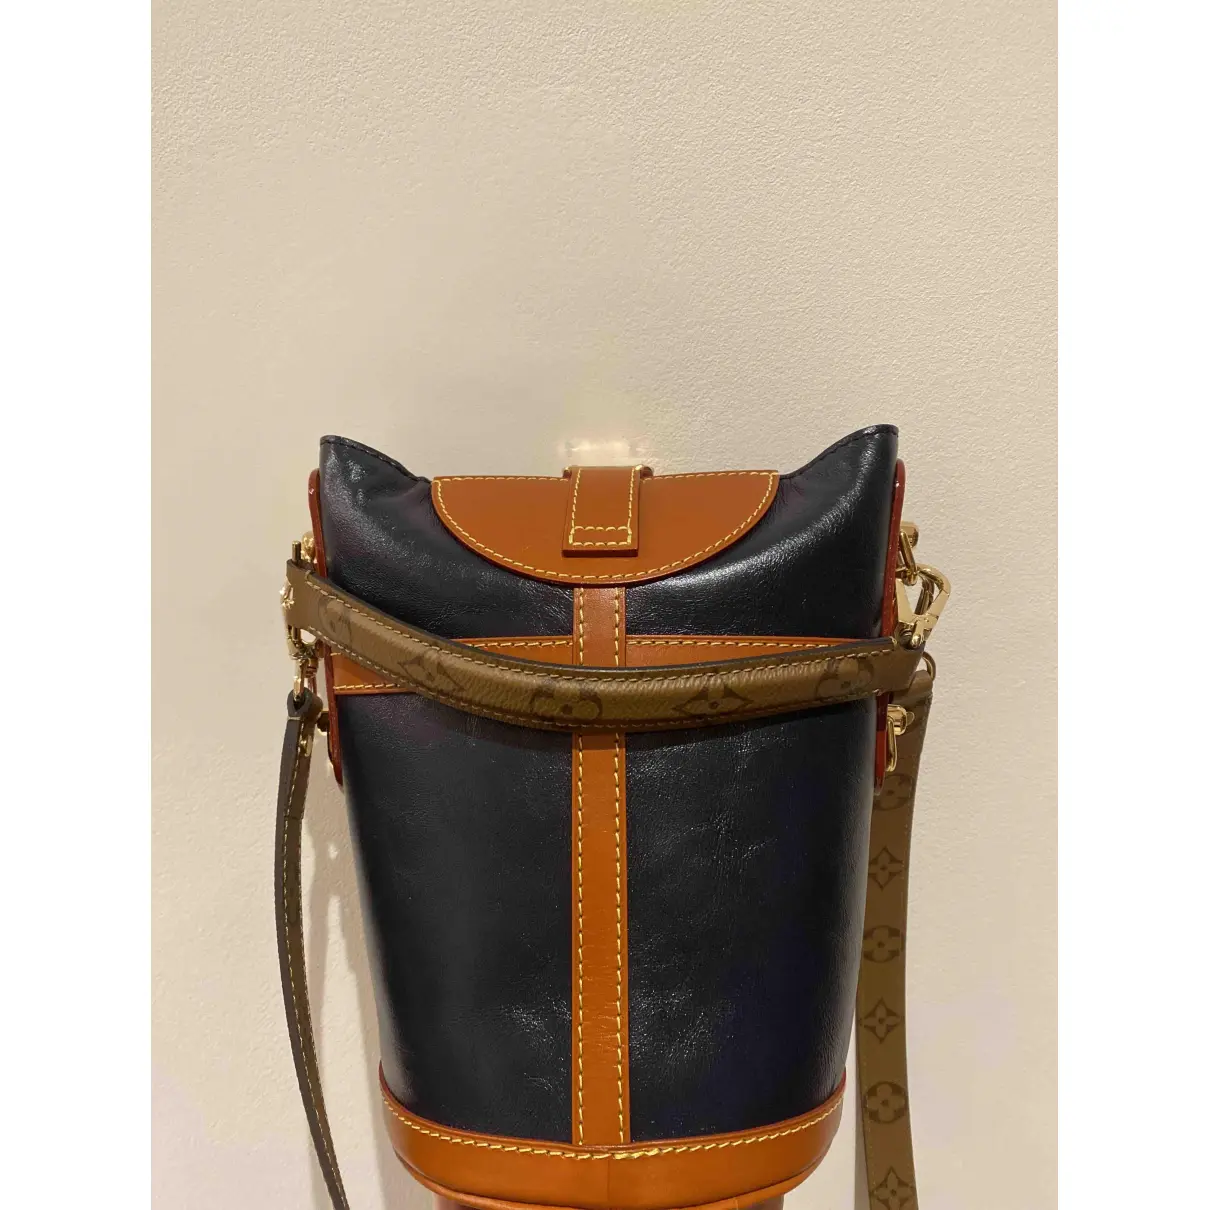 Buy Louis Vuitton Duffle leather handbag online